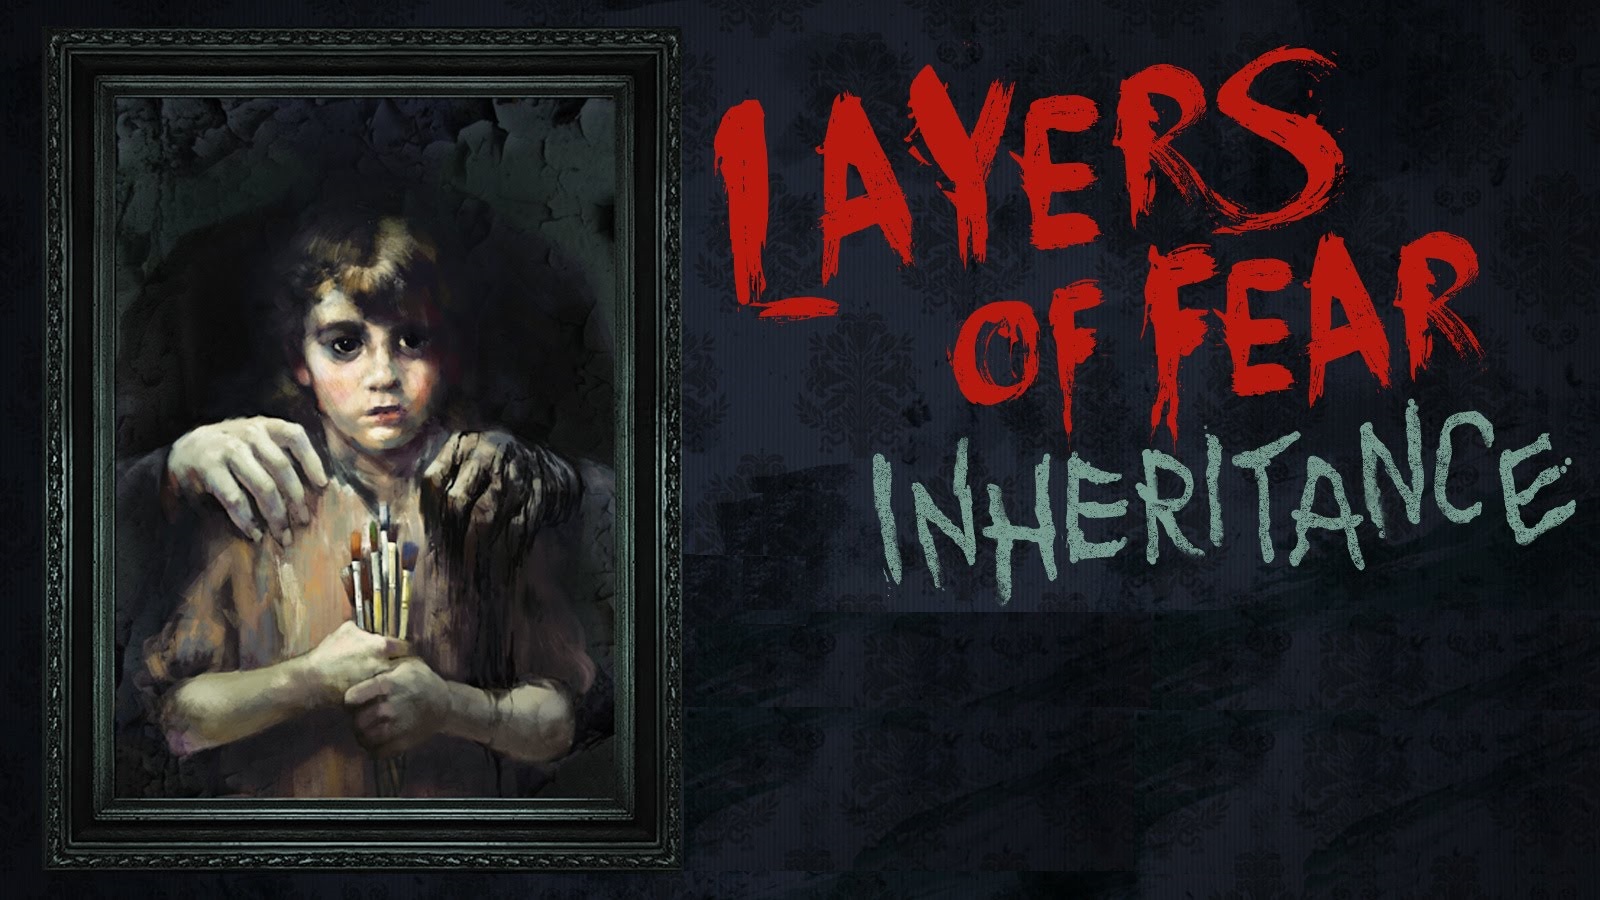 Layers of Fear: Inheritance DLC - GOOD ENDING 